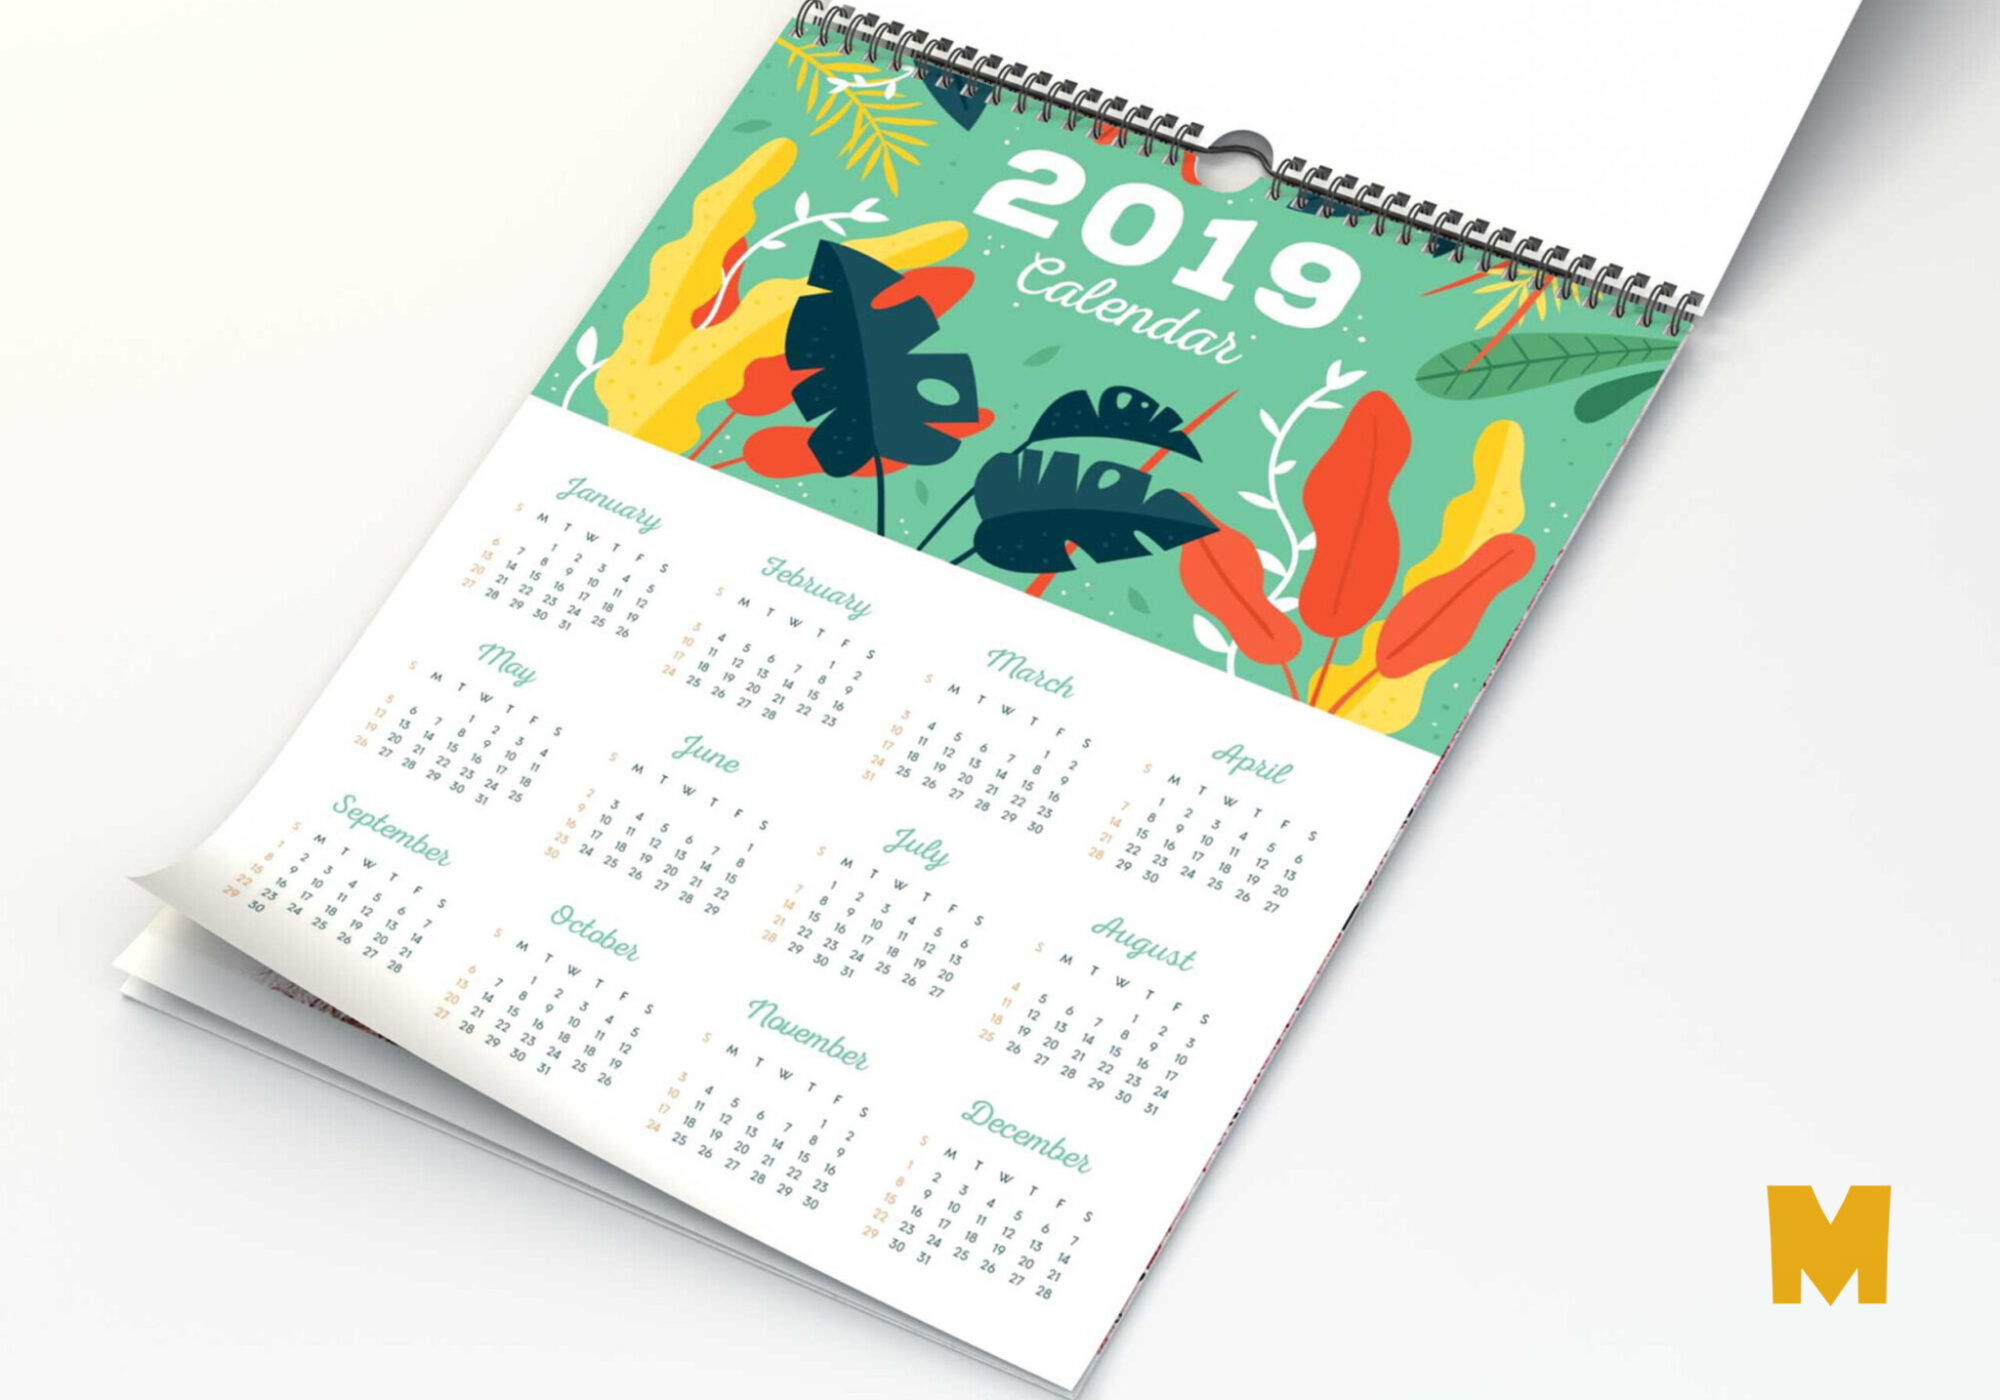 Free Opened Wall Calendar Design Mockup